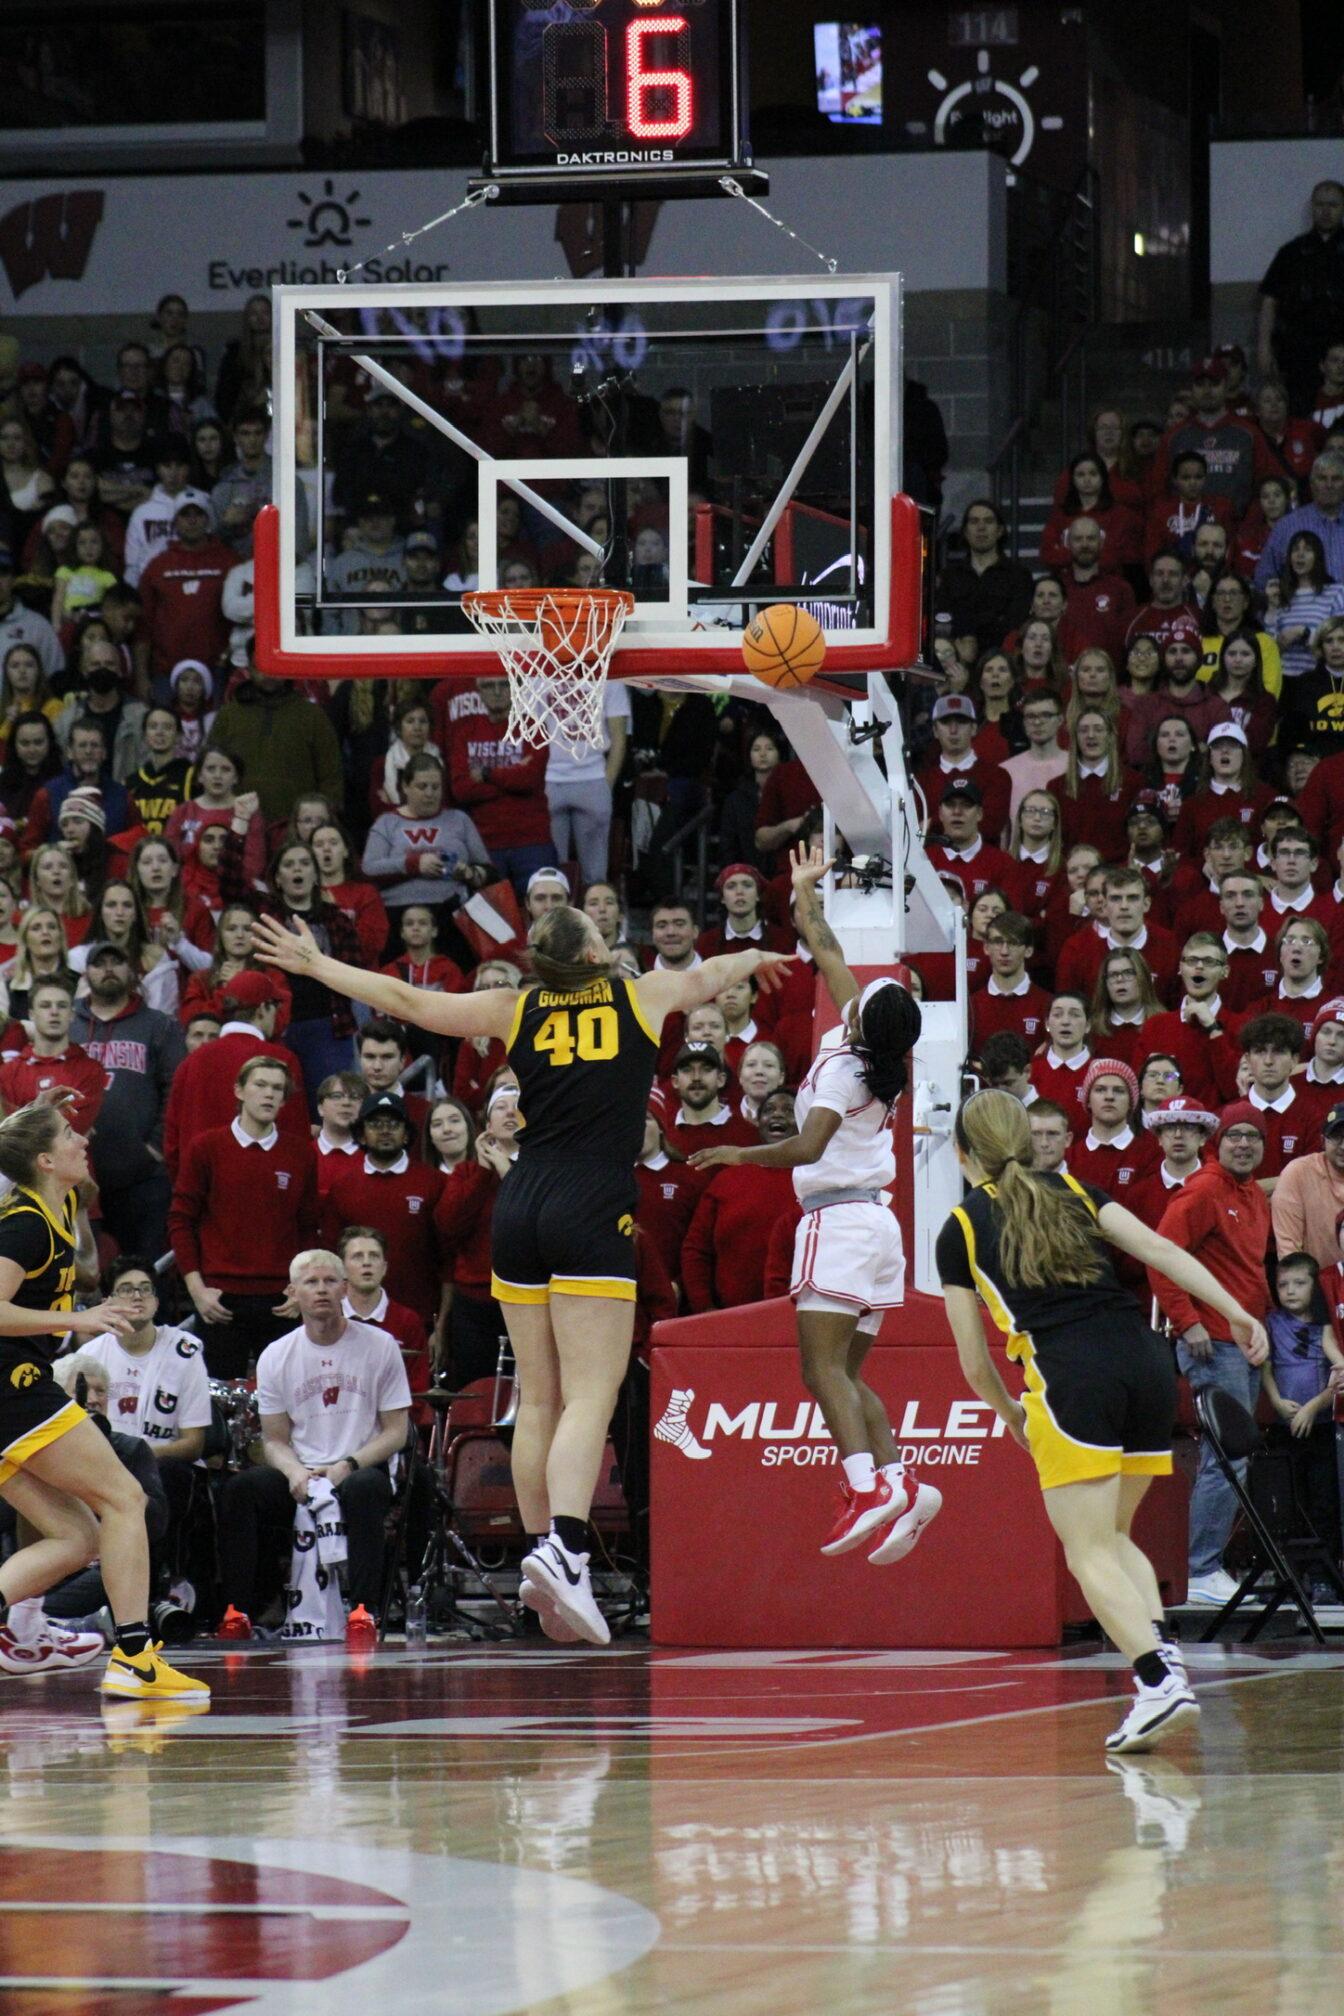 Women's basketball: Badgers return to the Kohl Center for second meeting  with stout Nebraska team – The Badger Herald